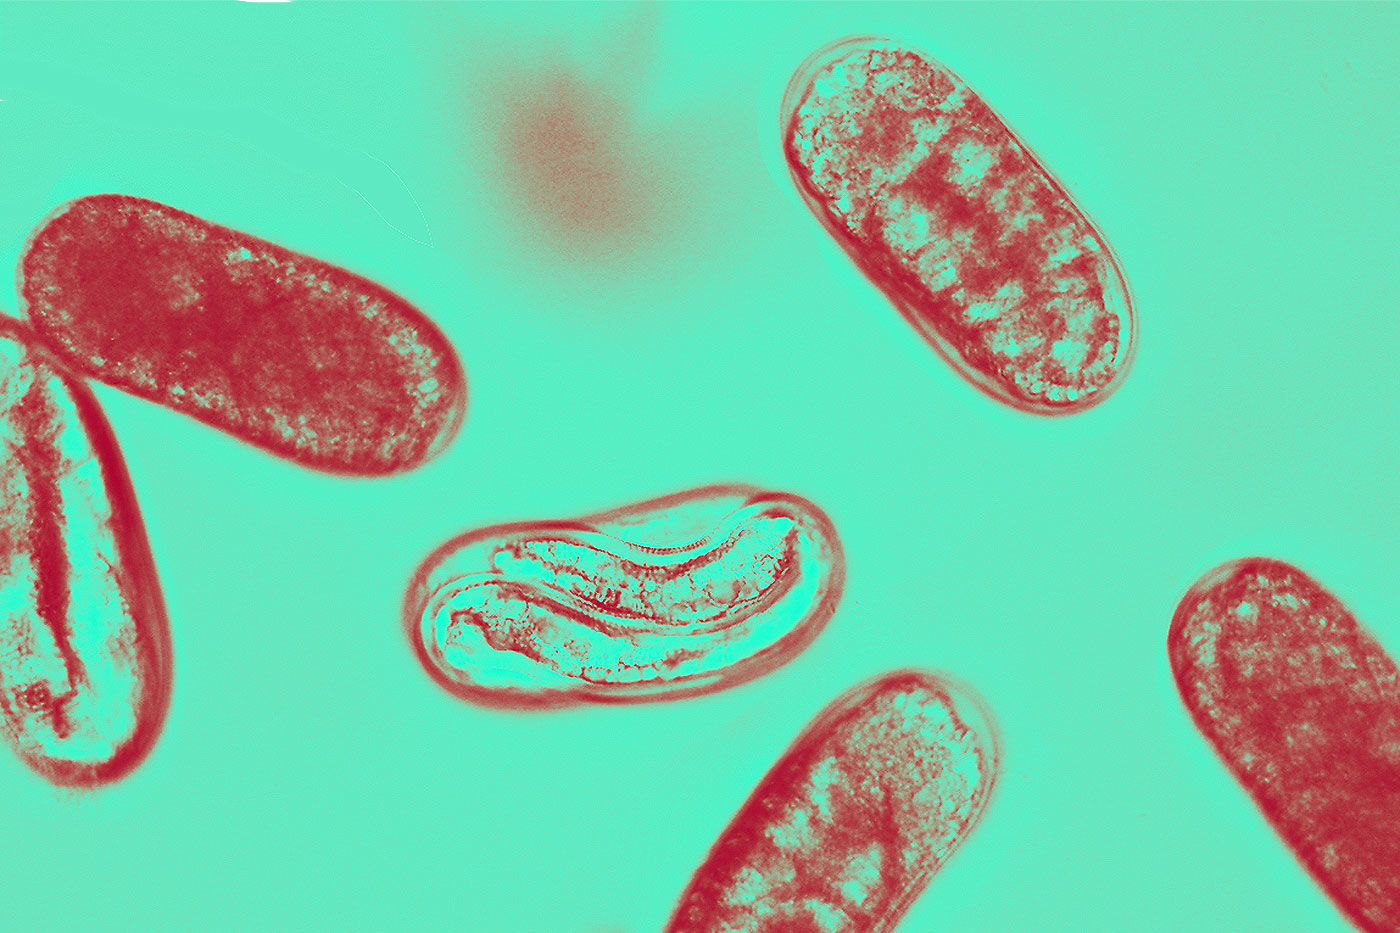 soybean cyst nematode eggs under microscope